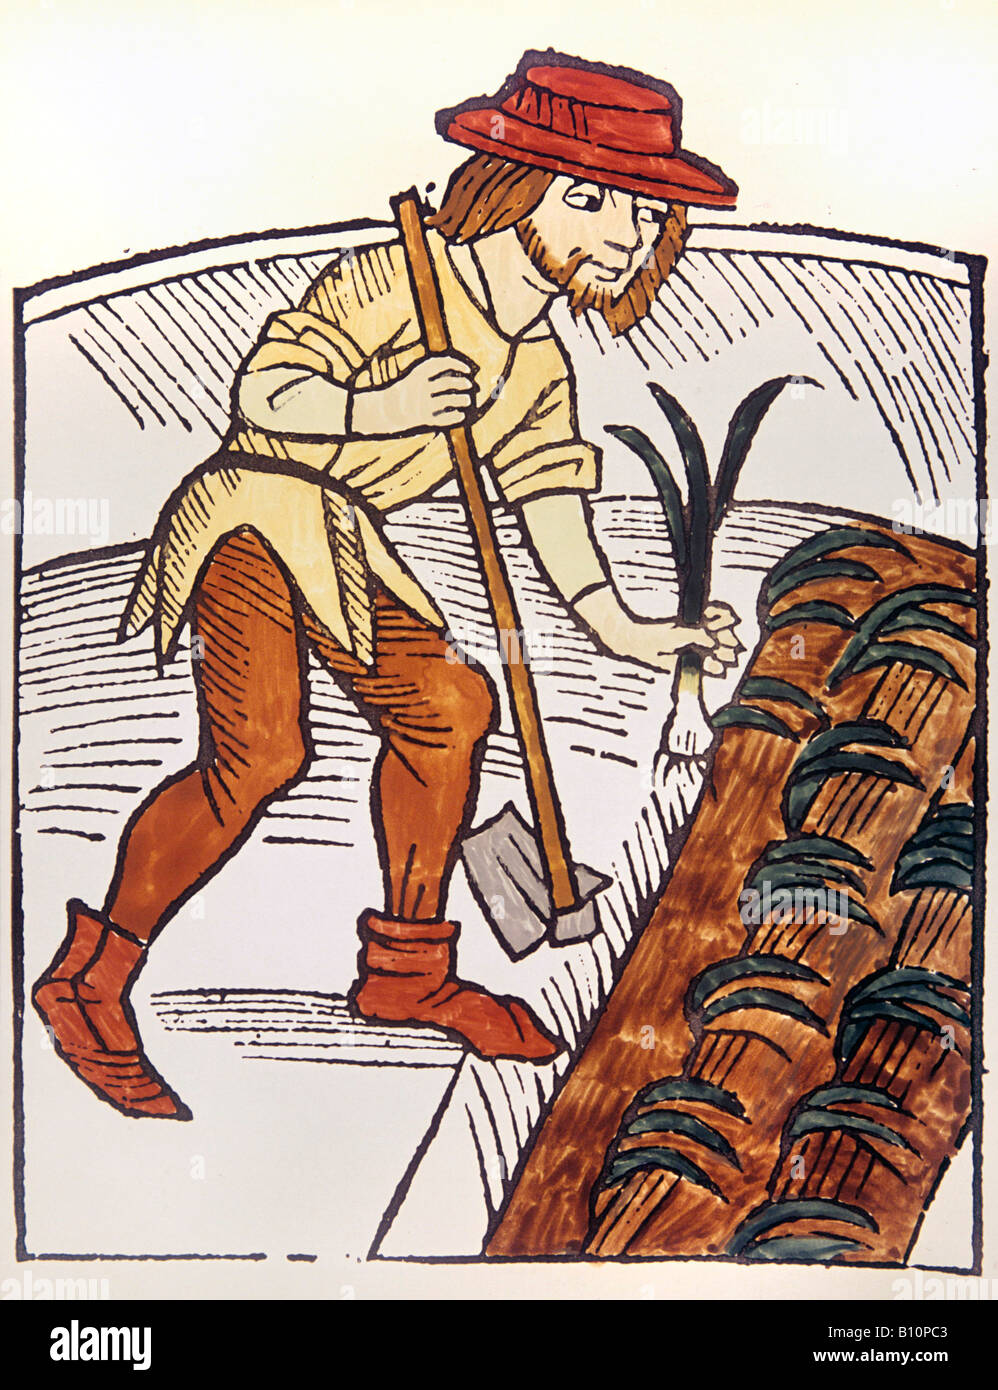 Anbau Lauch woodcu aus dem 15. Jahrhundert. Mittelalter. Stockfoto